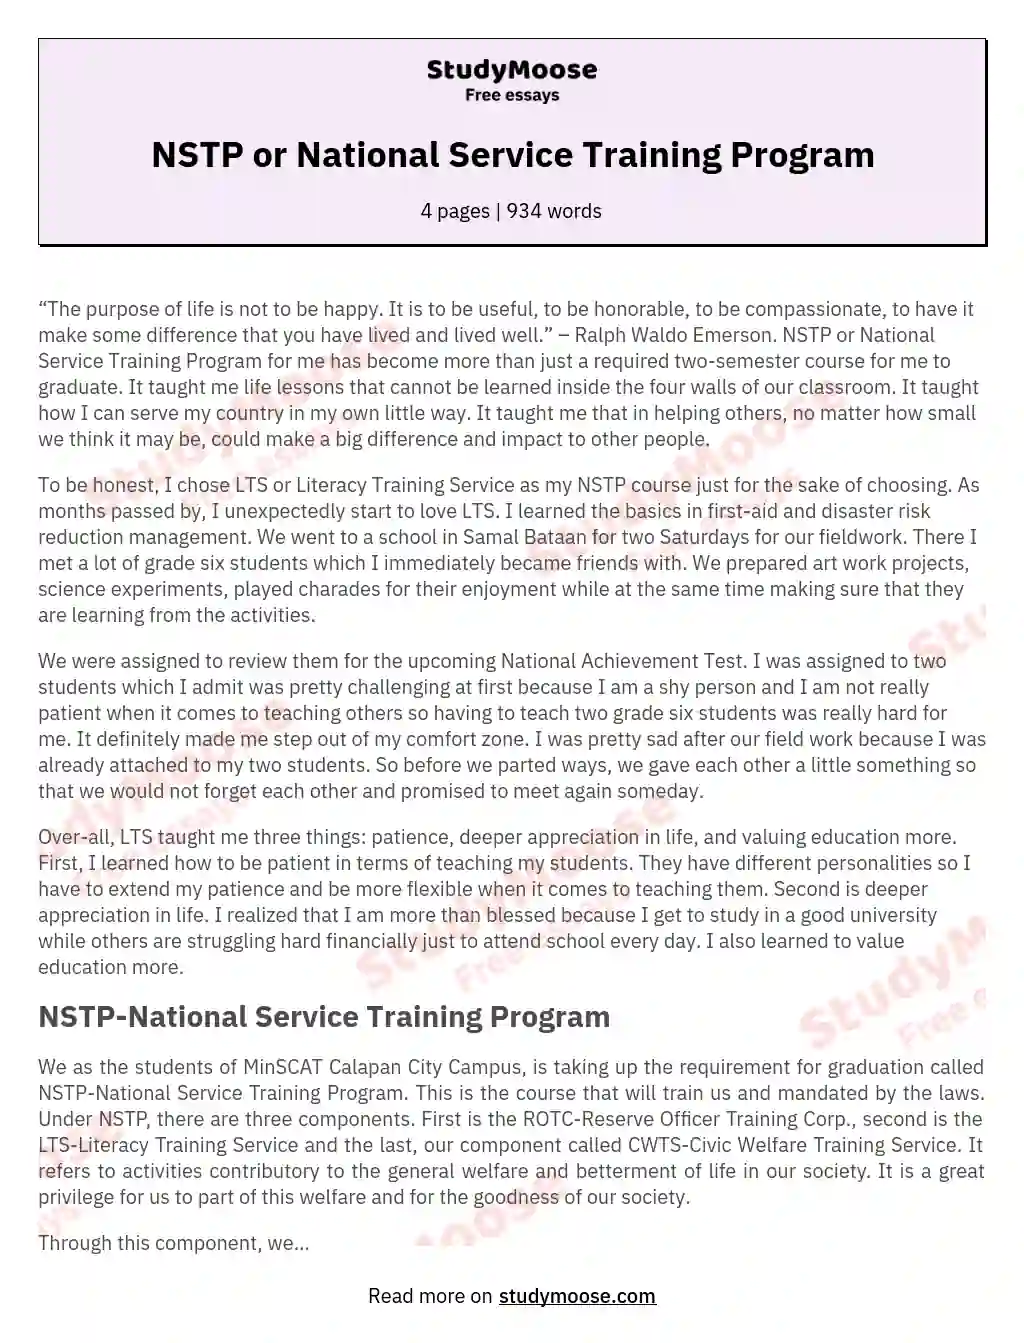 NSTP or National Service Training Program essay